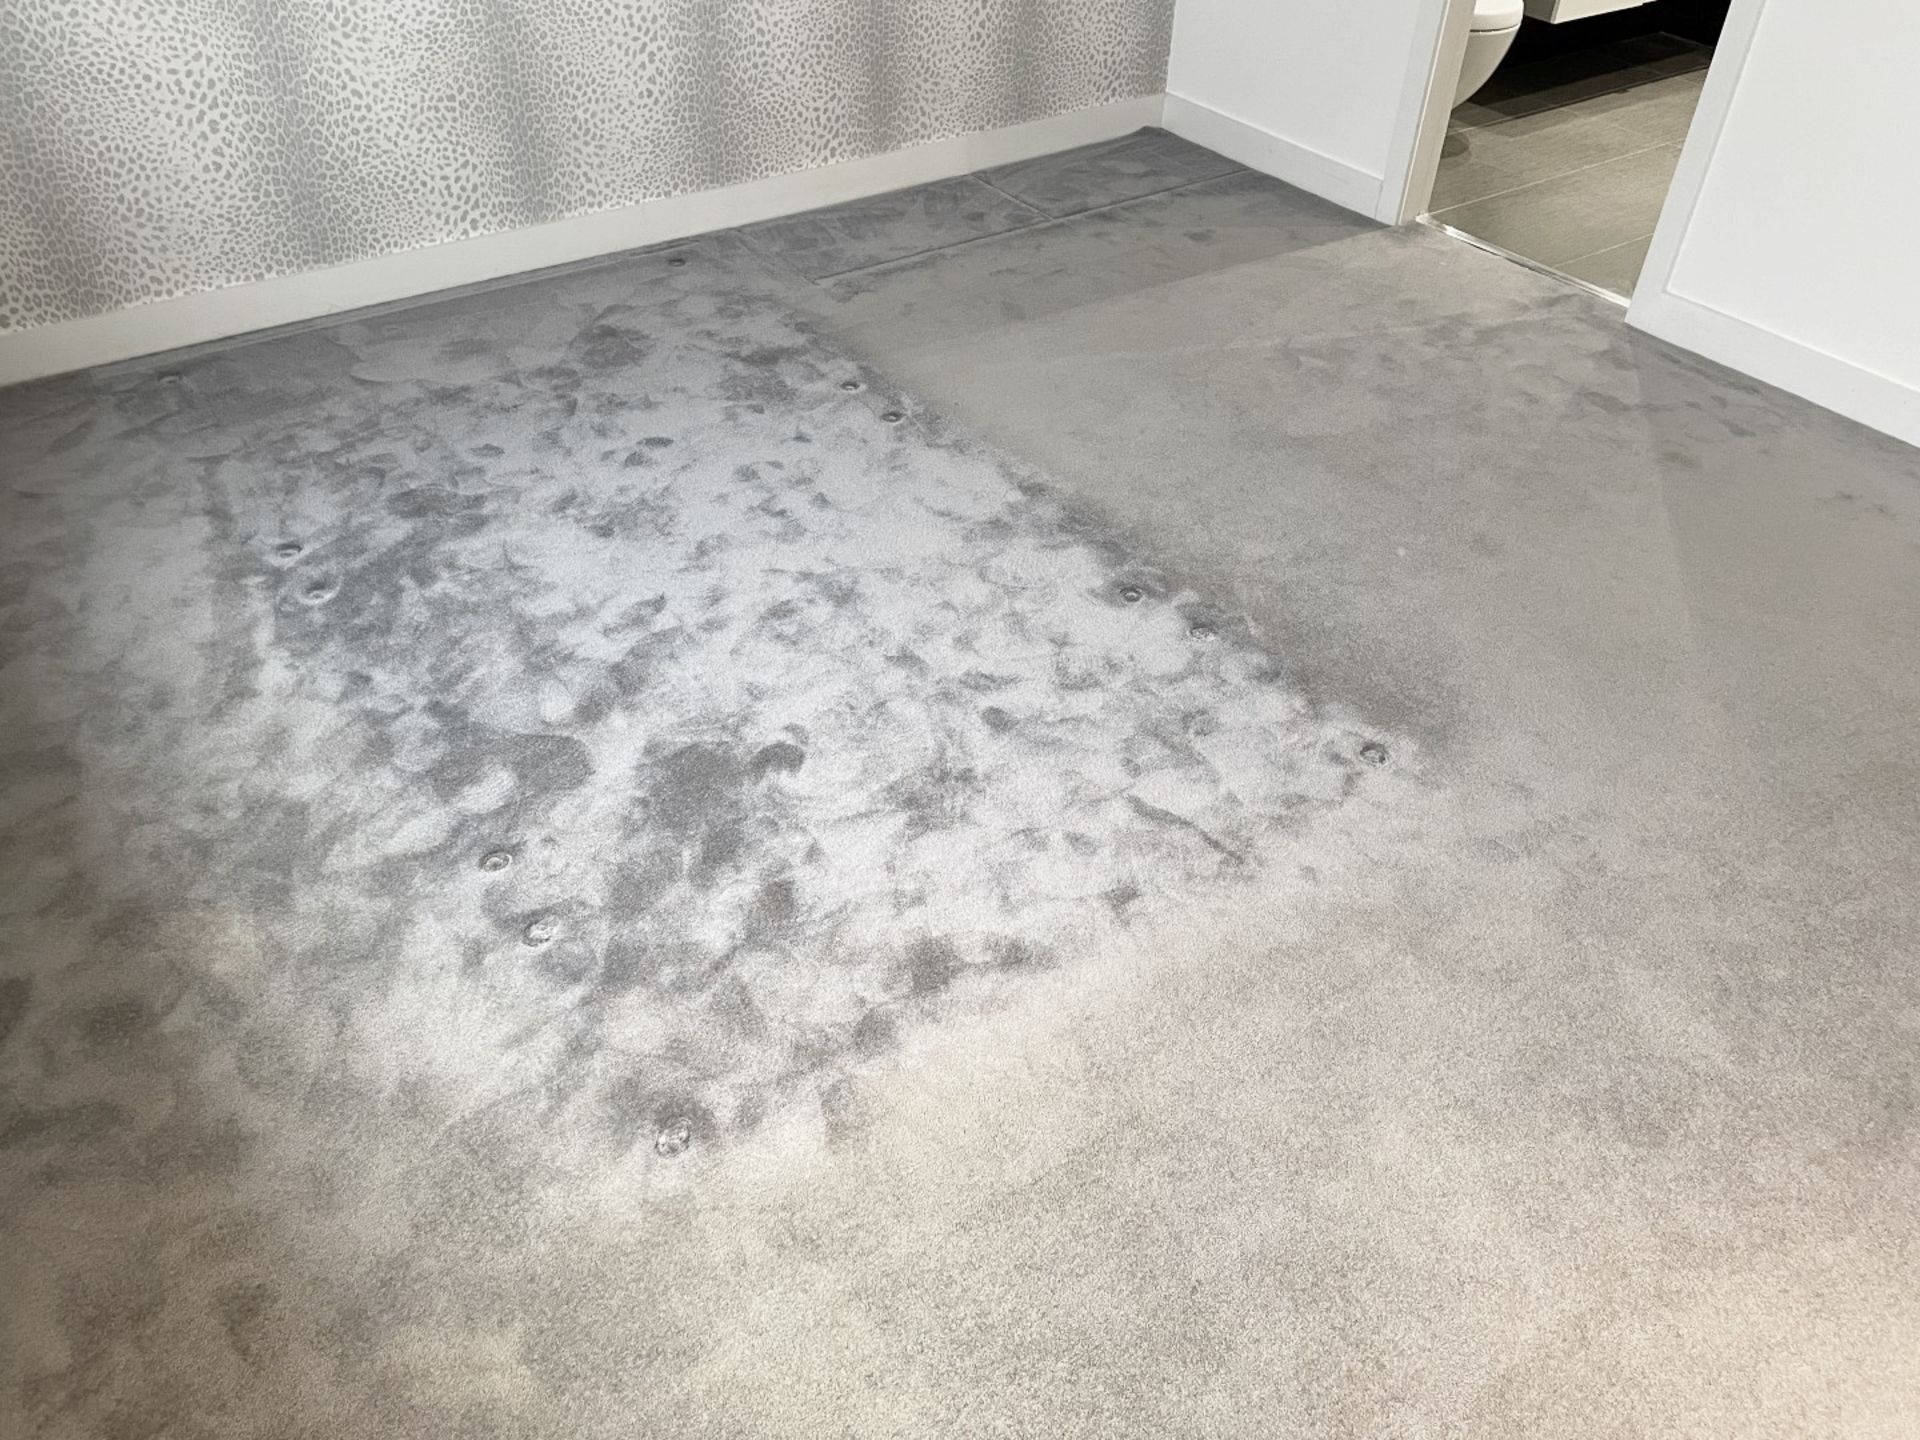 1 x Premium Fitted Bedroom Carpet In Grey (3.9 x 4m) - Ref: REAR-BD/1stFLR - CL742 - Image 5 of 7